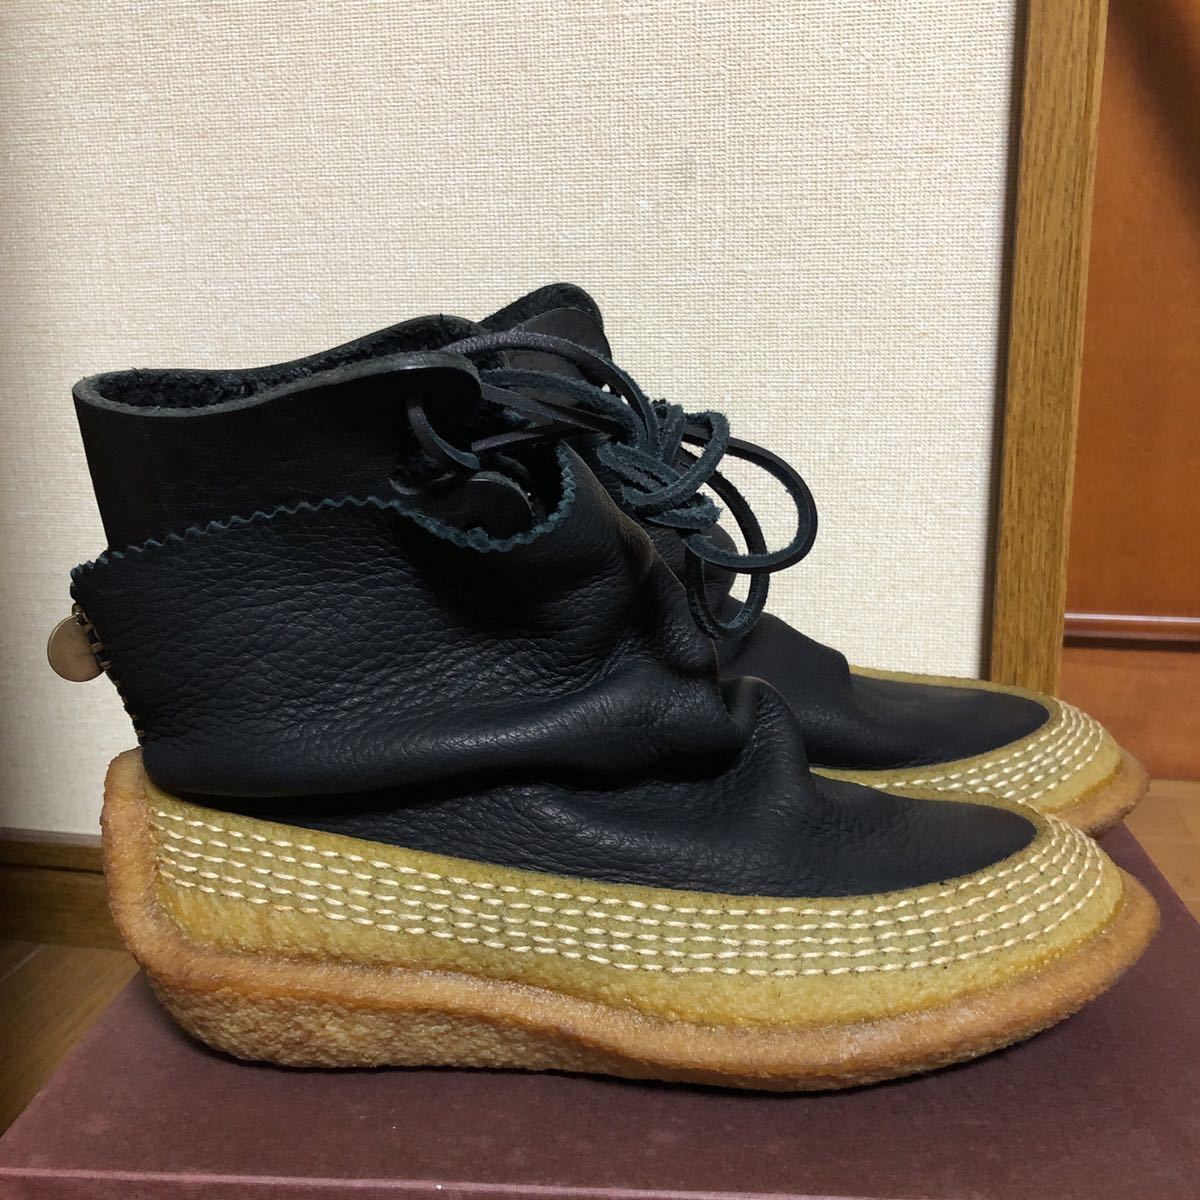 KAPITAL キャピタル ピカソ ブーツ レイヤード レザー ラバーソール ブラック 靴 LAYERED LEATHER PICASSO BOOTS  BLACK RUBBER SOLE